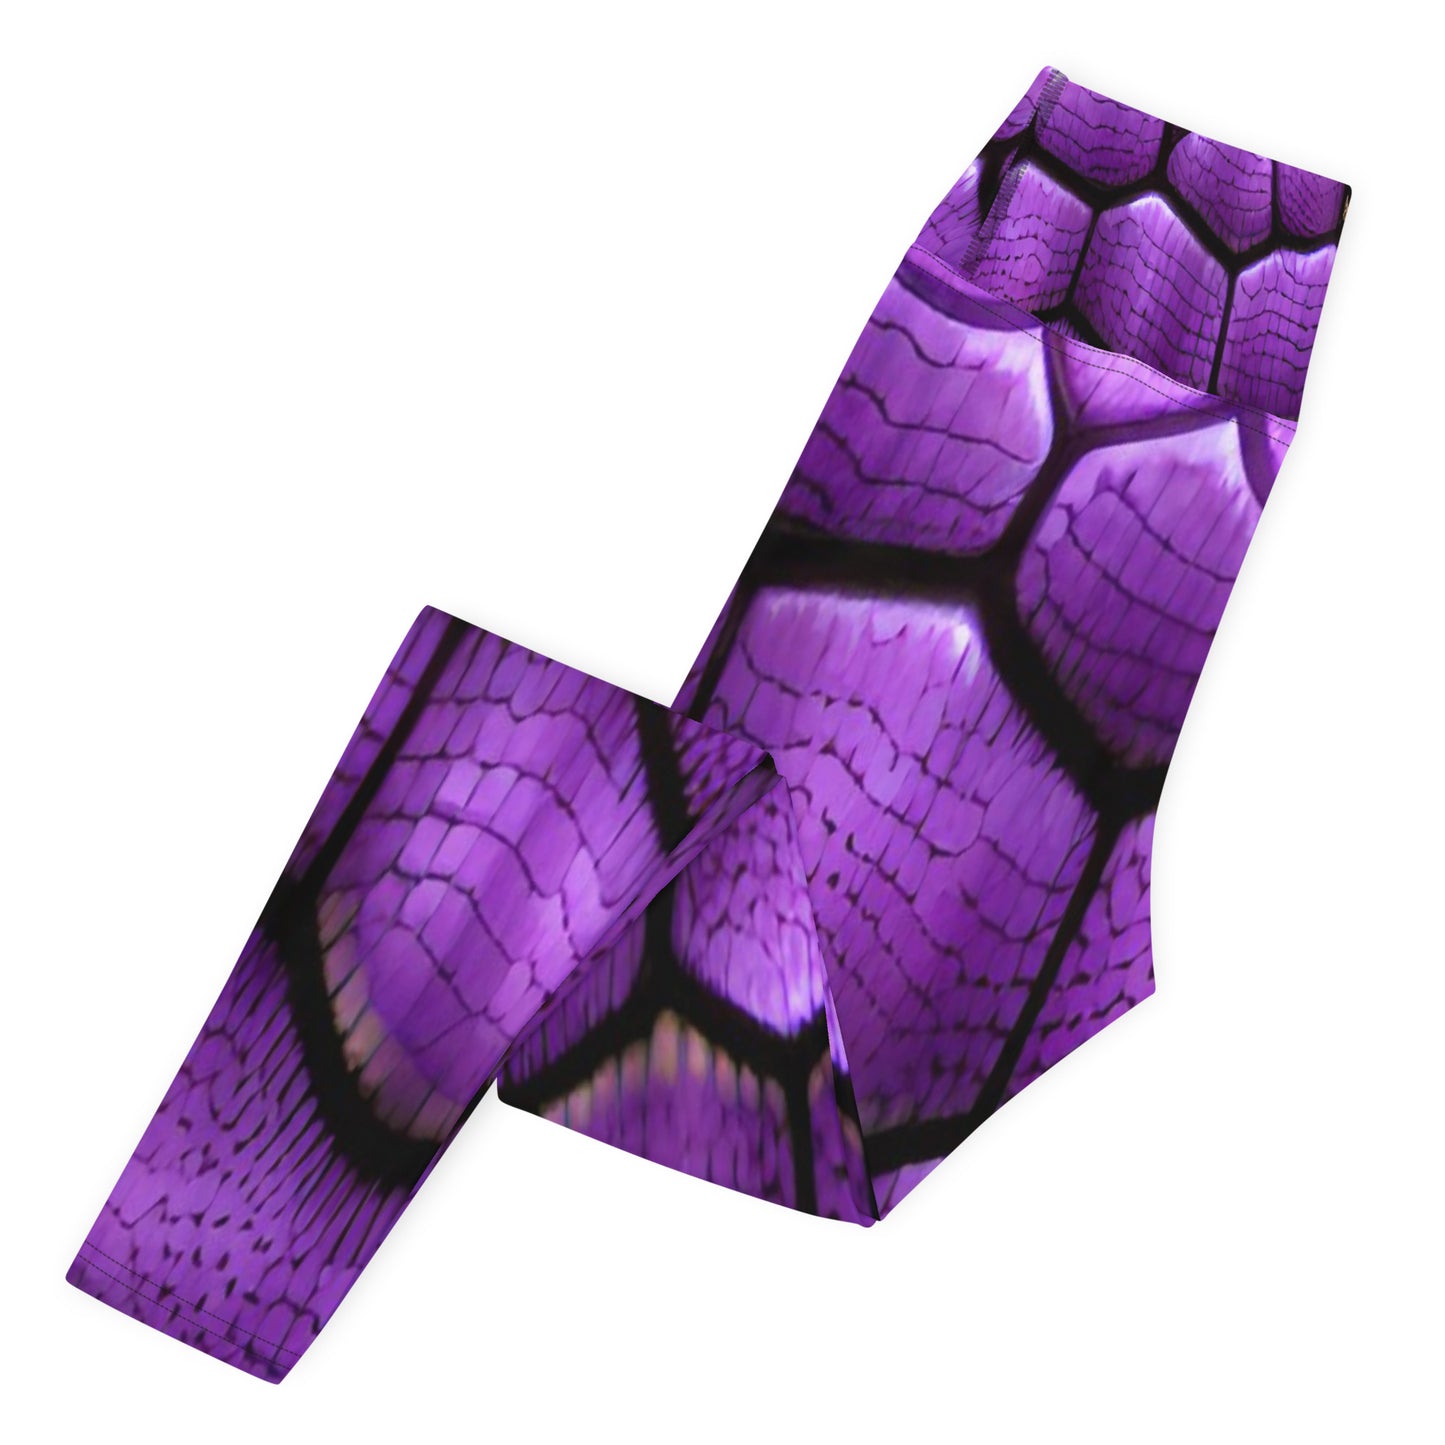 Purple Dragon Scales Custom Print Yoga Leggings